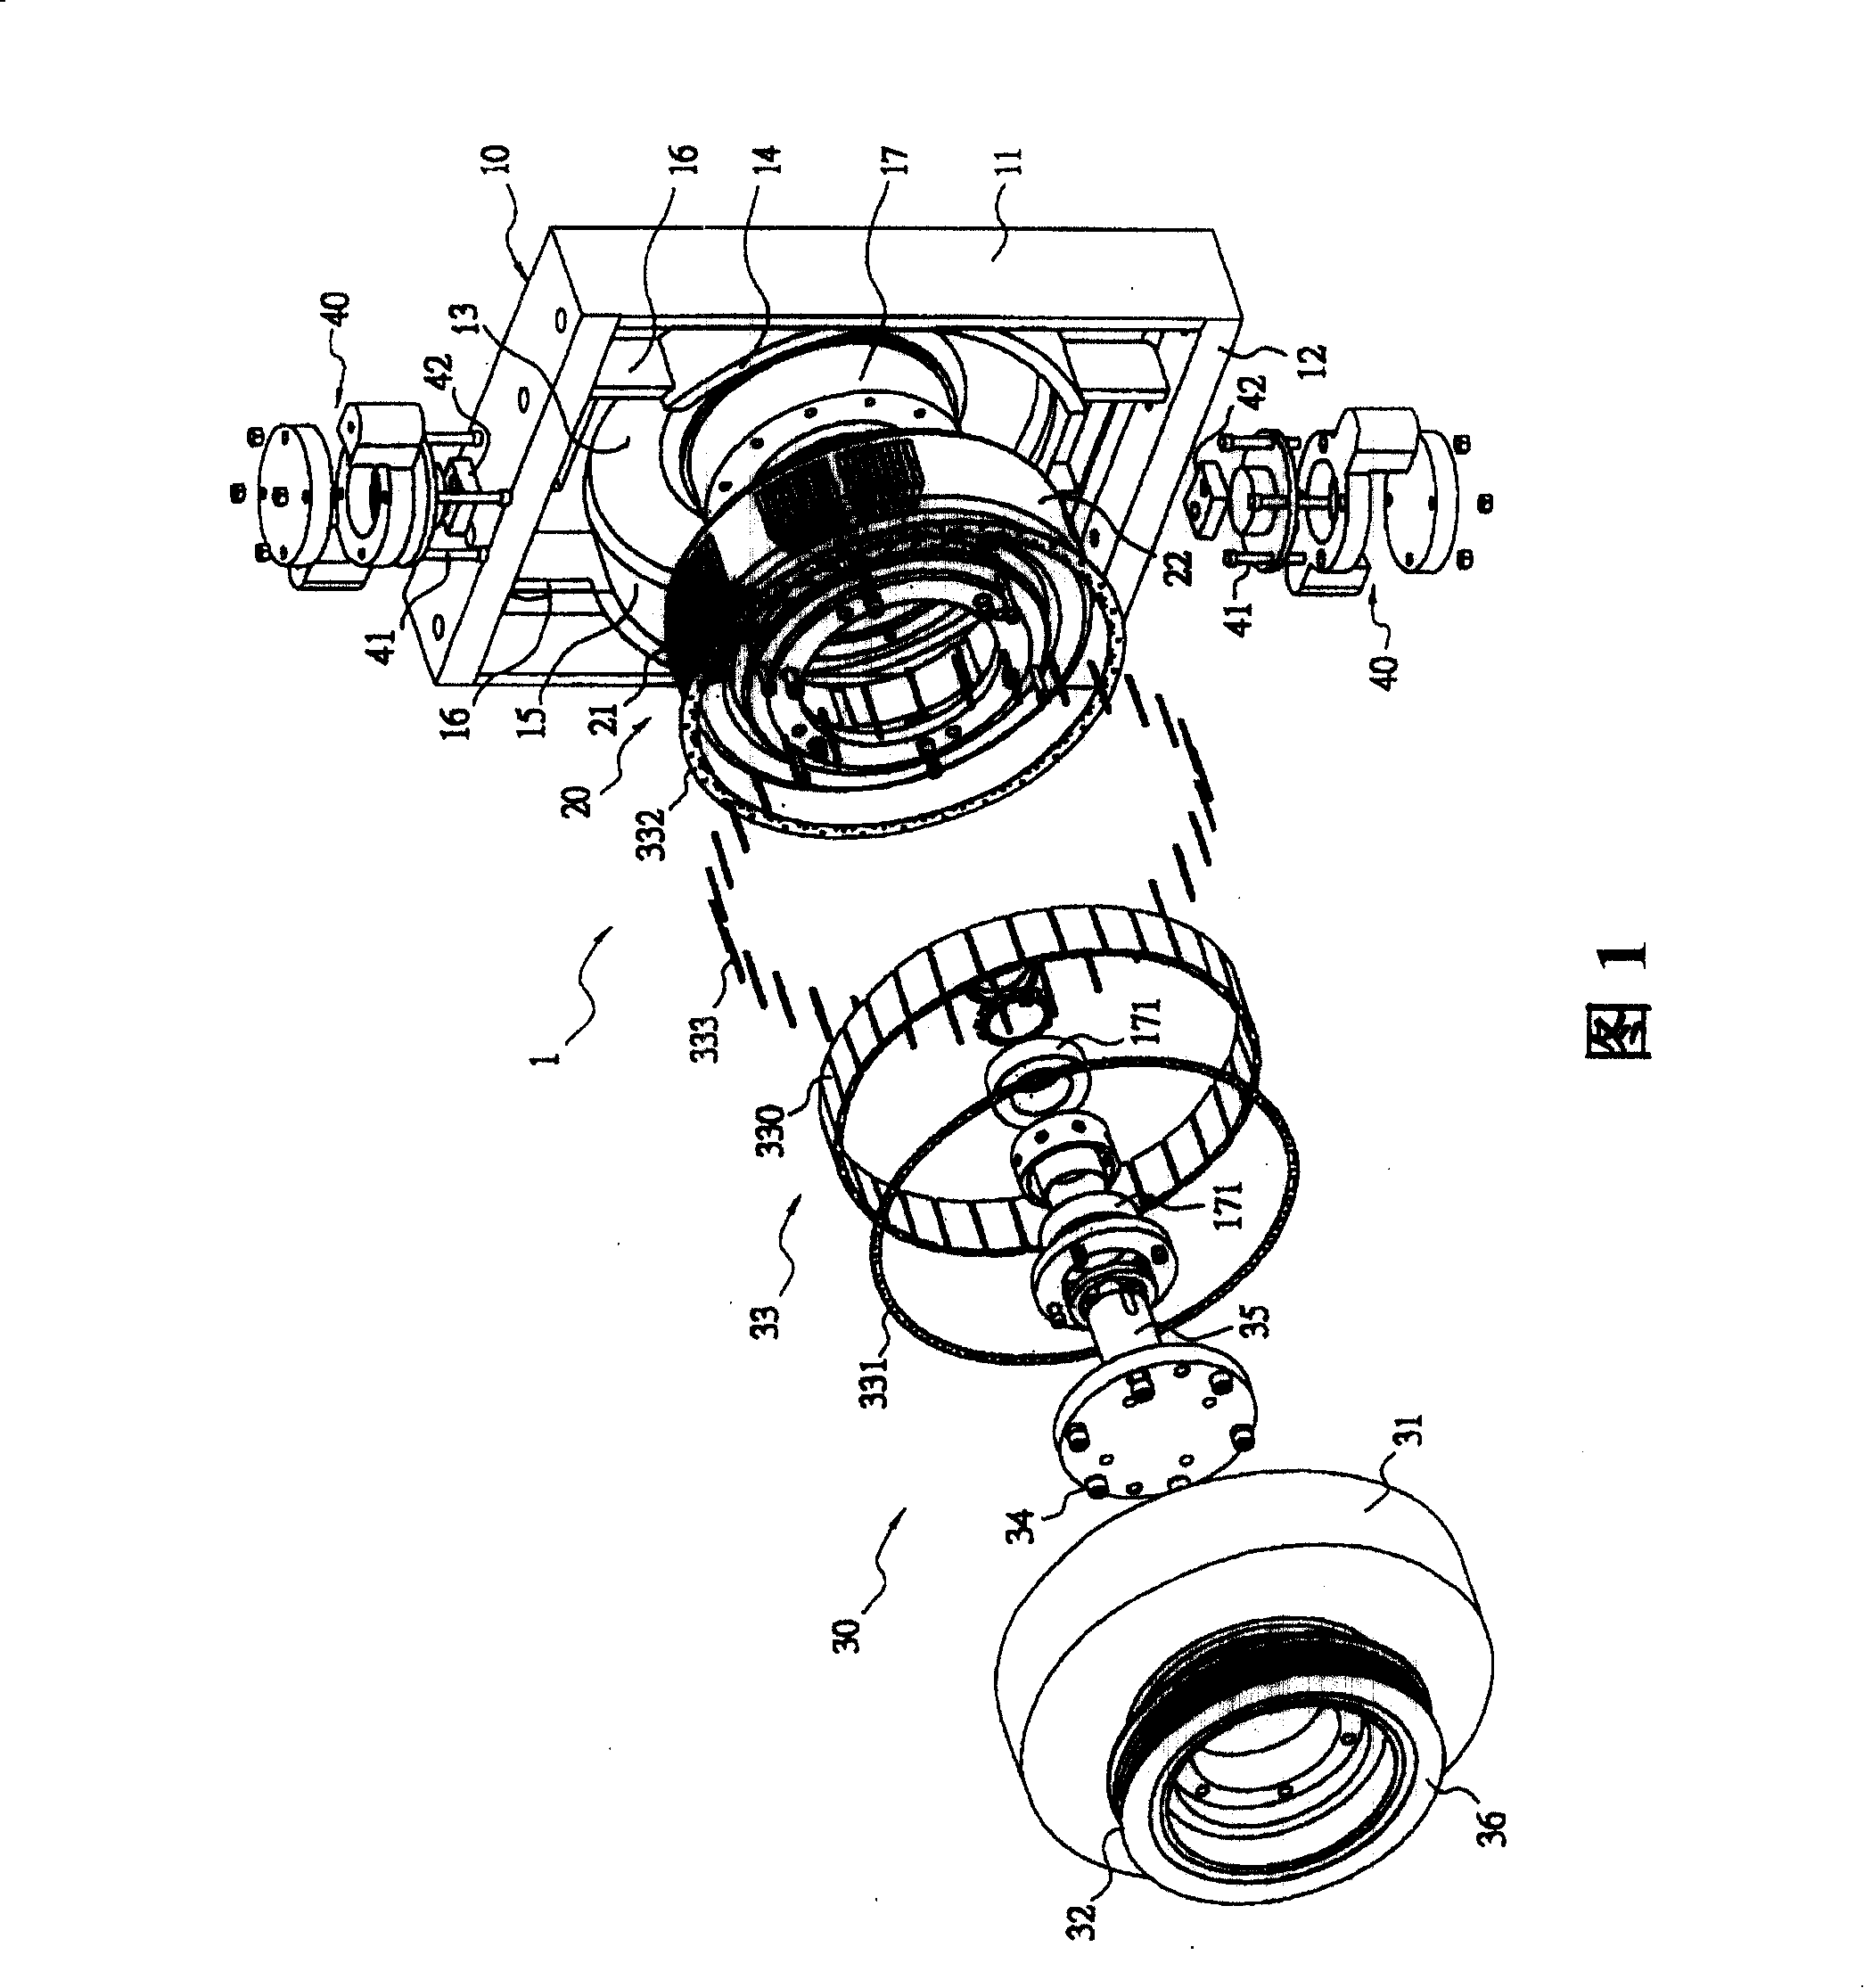 External-rotating permanent magnet motor